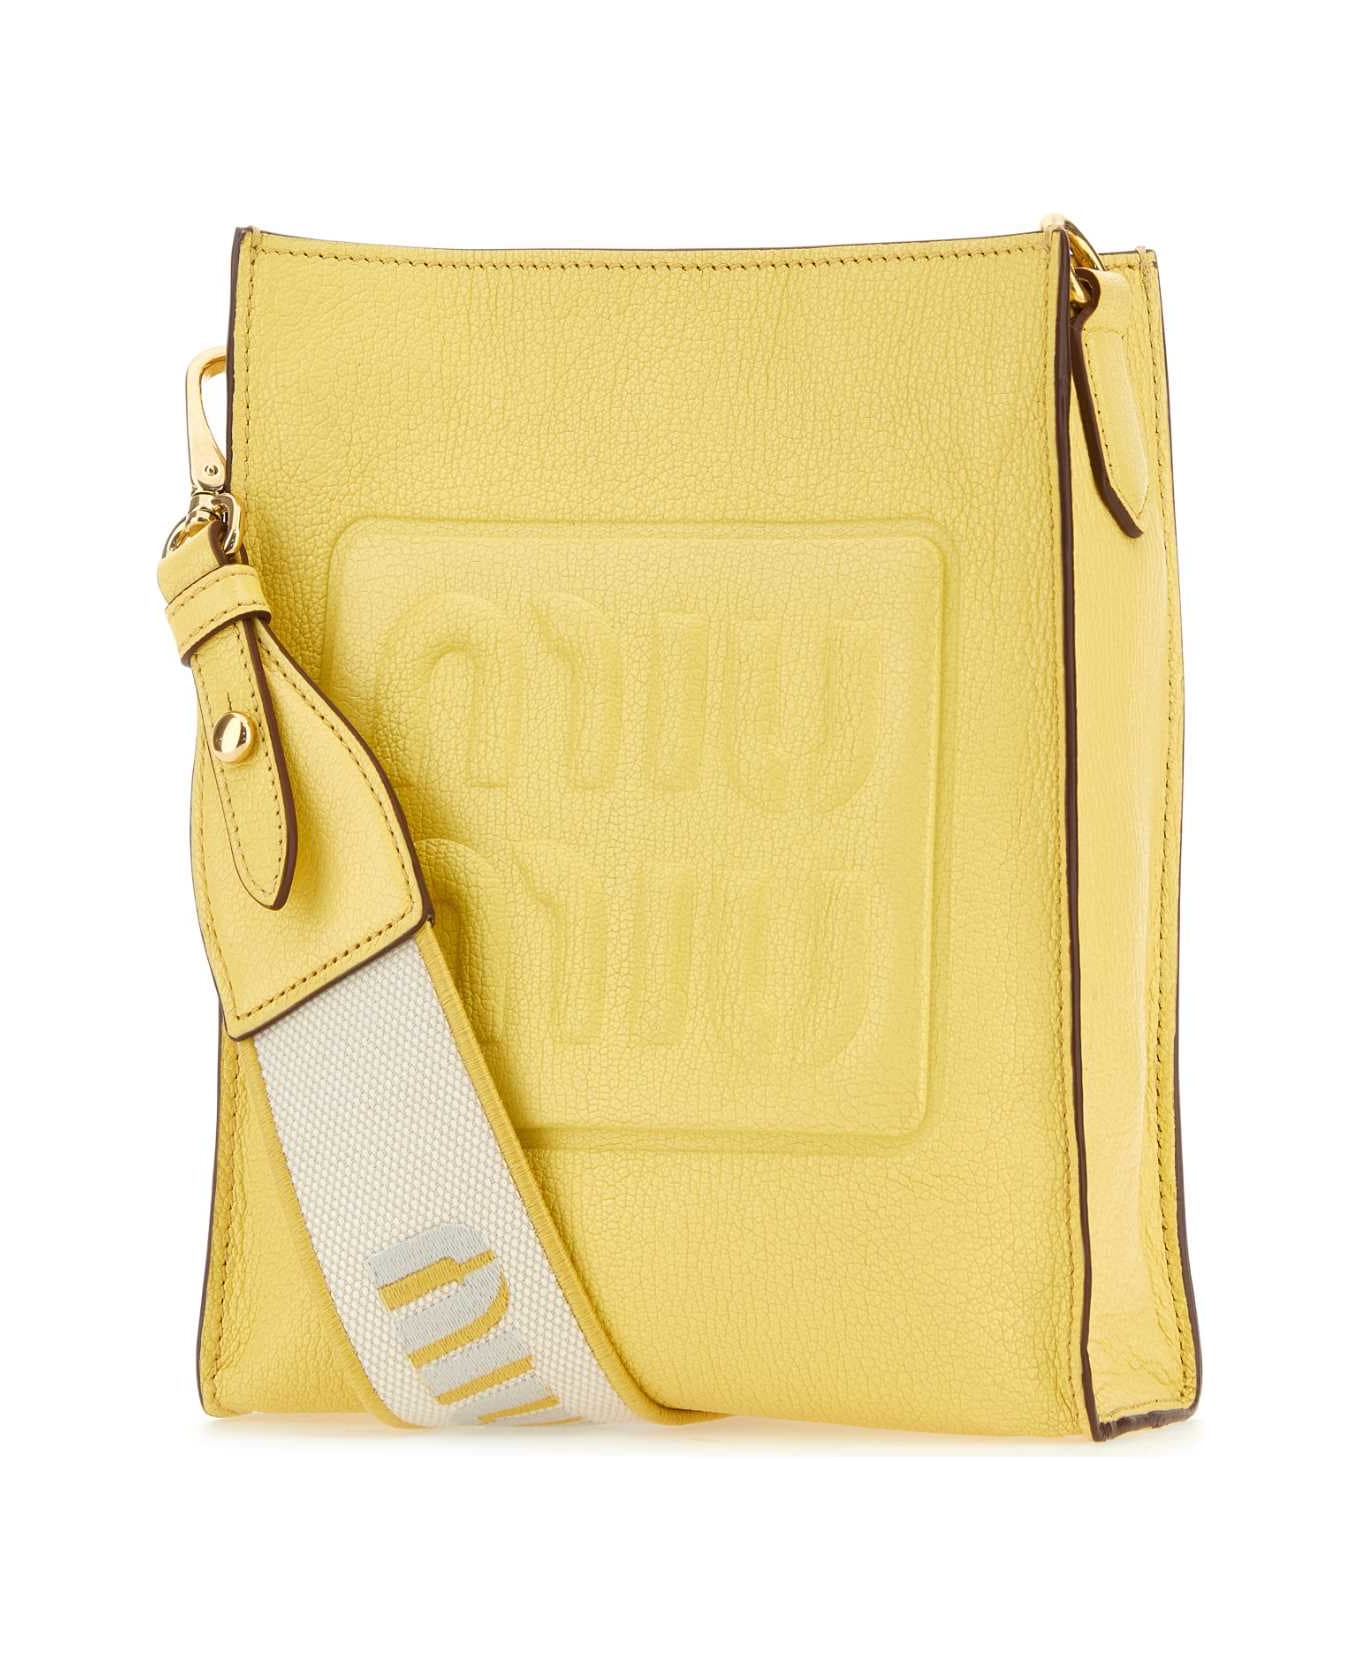 Miu Miu Yellow Leather Crossbody Bag - LIMONE